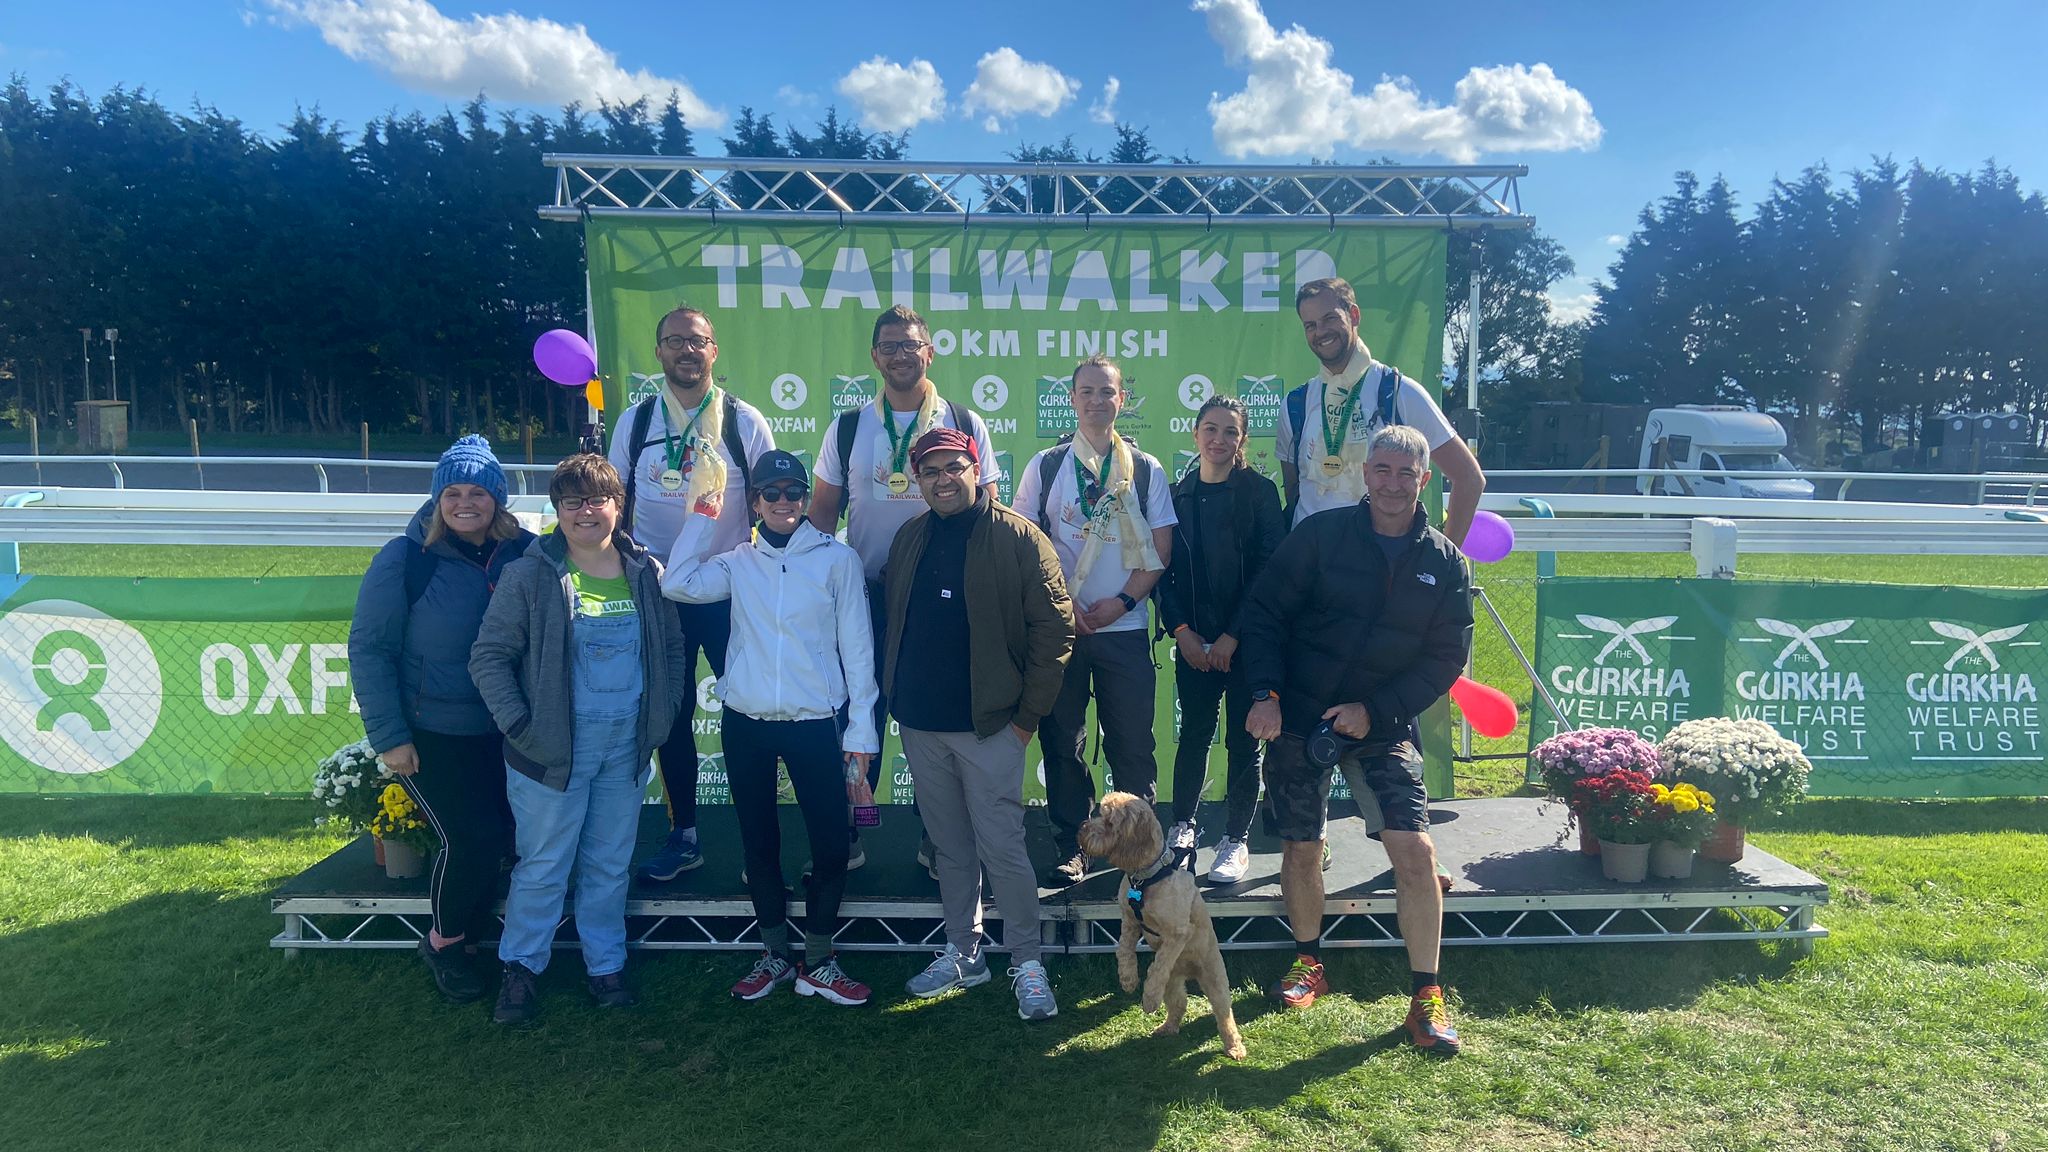 2 RLDatix teams take on the Trailwalker for charity.